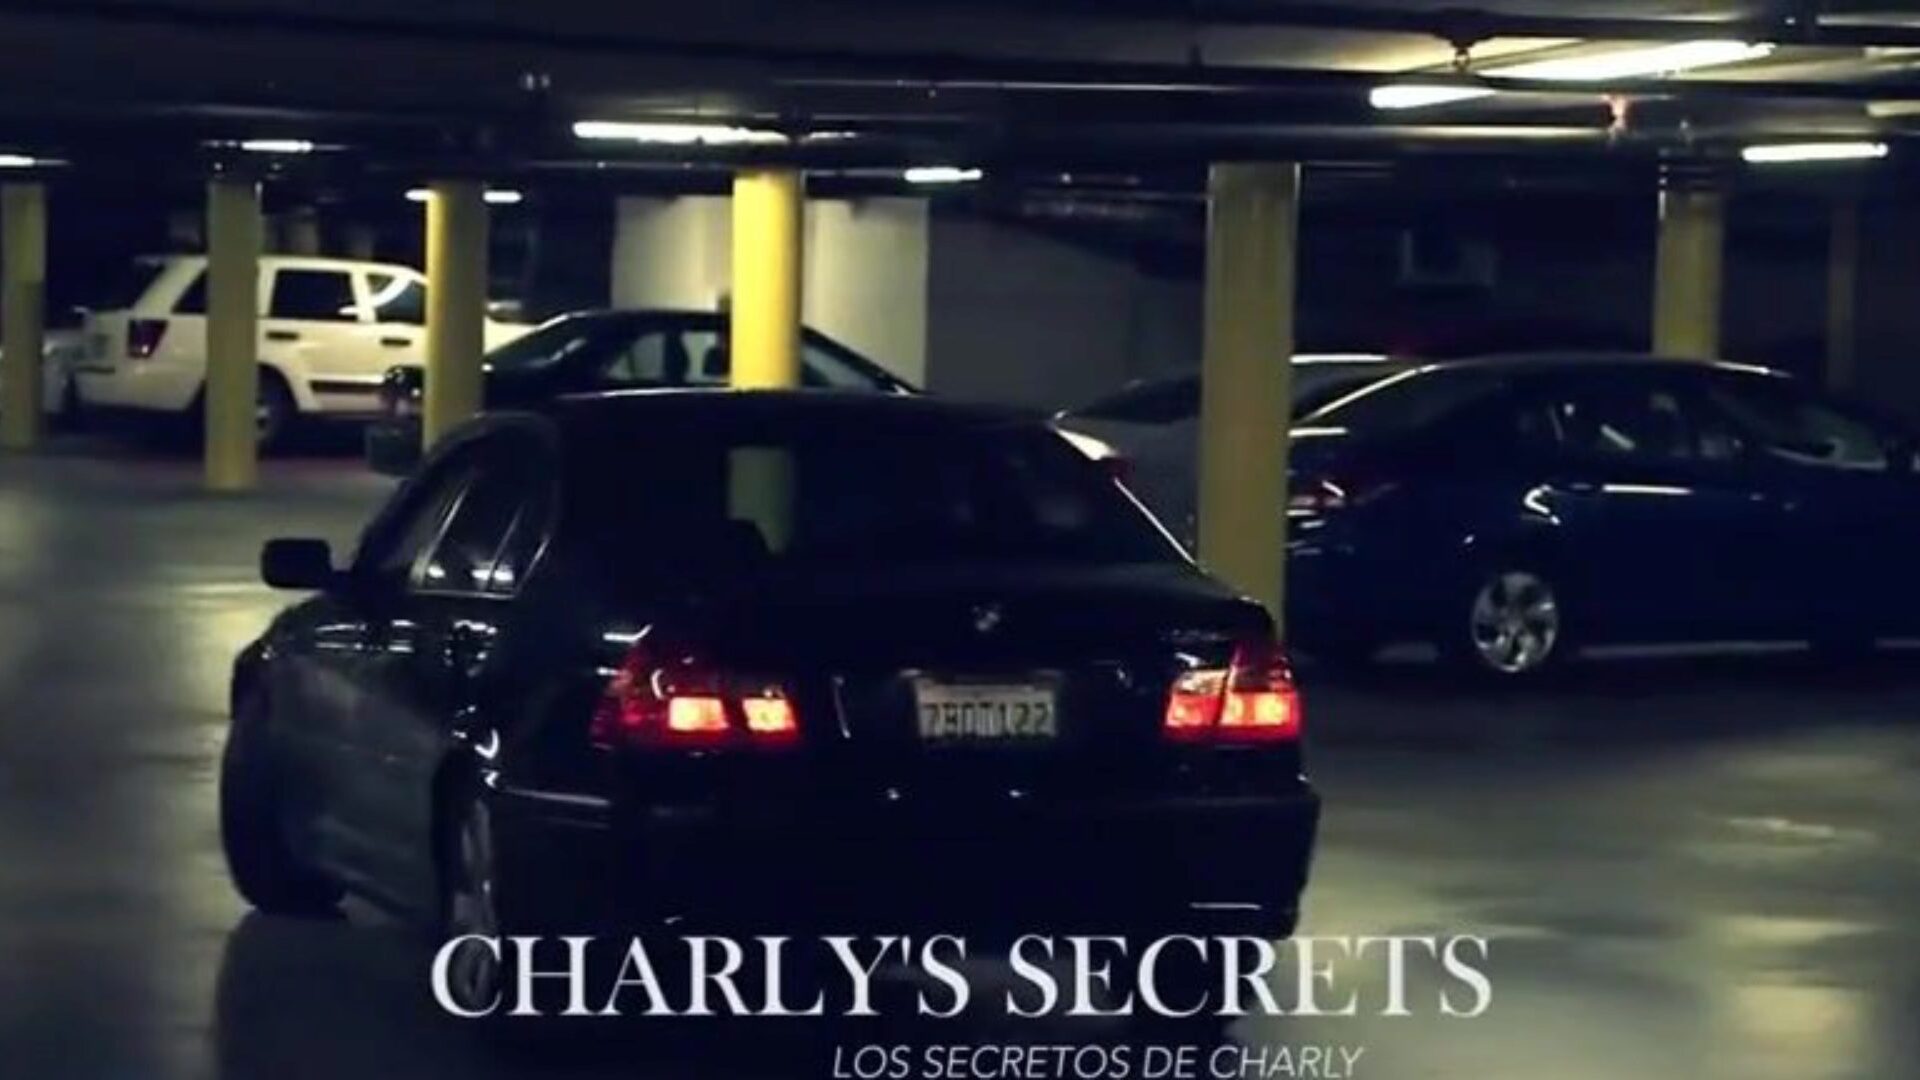 Nicky Ferrari - Charly'_s Screts  - Full Episodes TV Page for Nicky Ferrari - Charly'_s Screts and other total videos